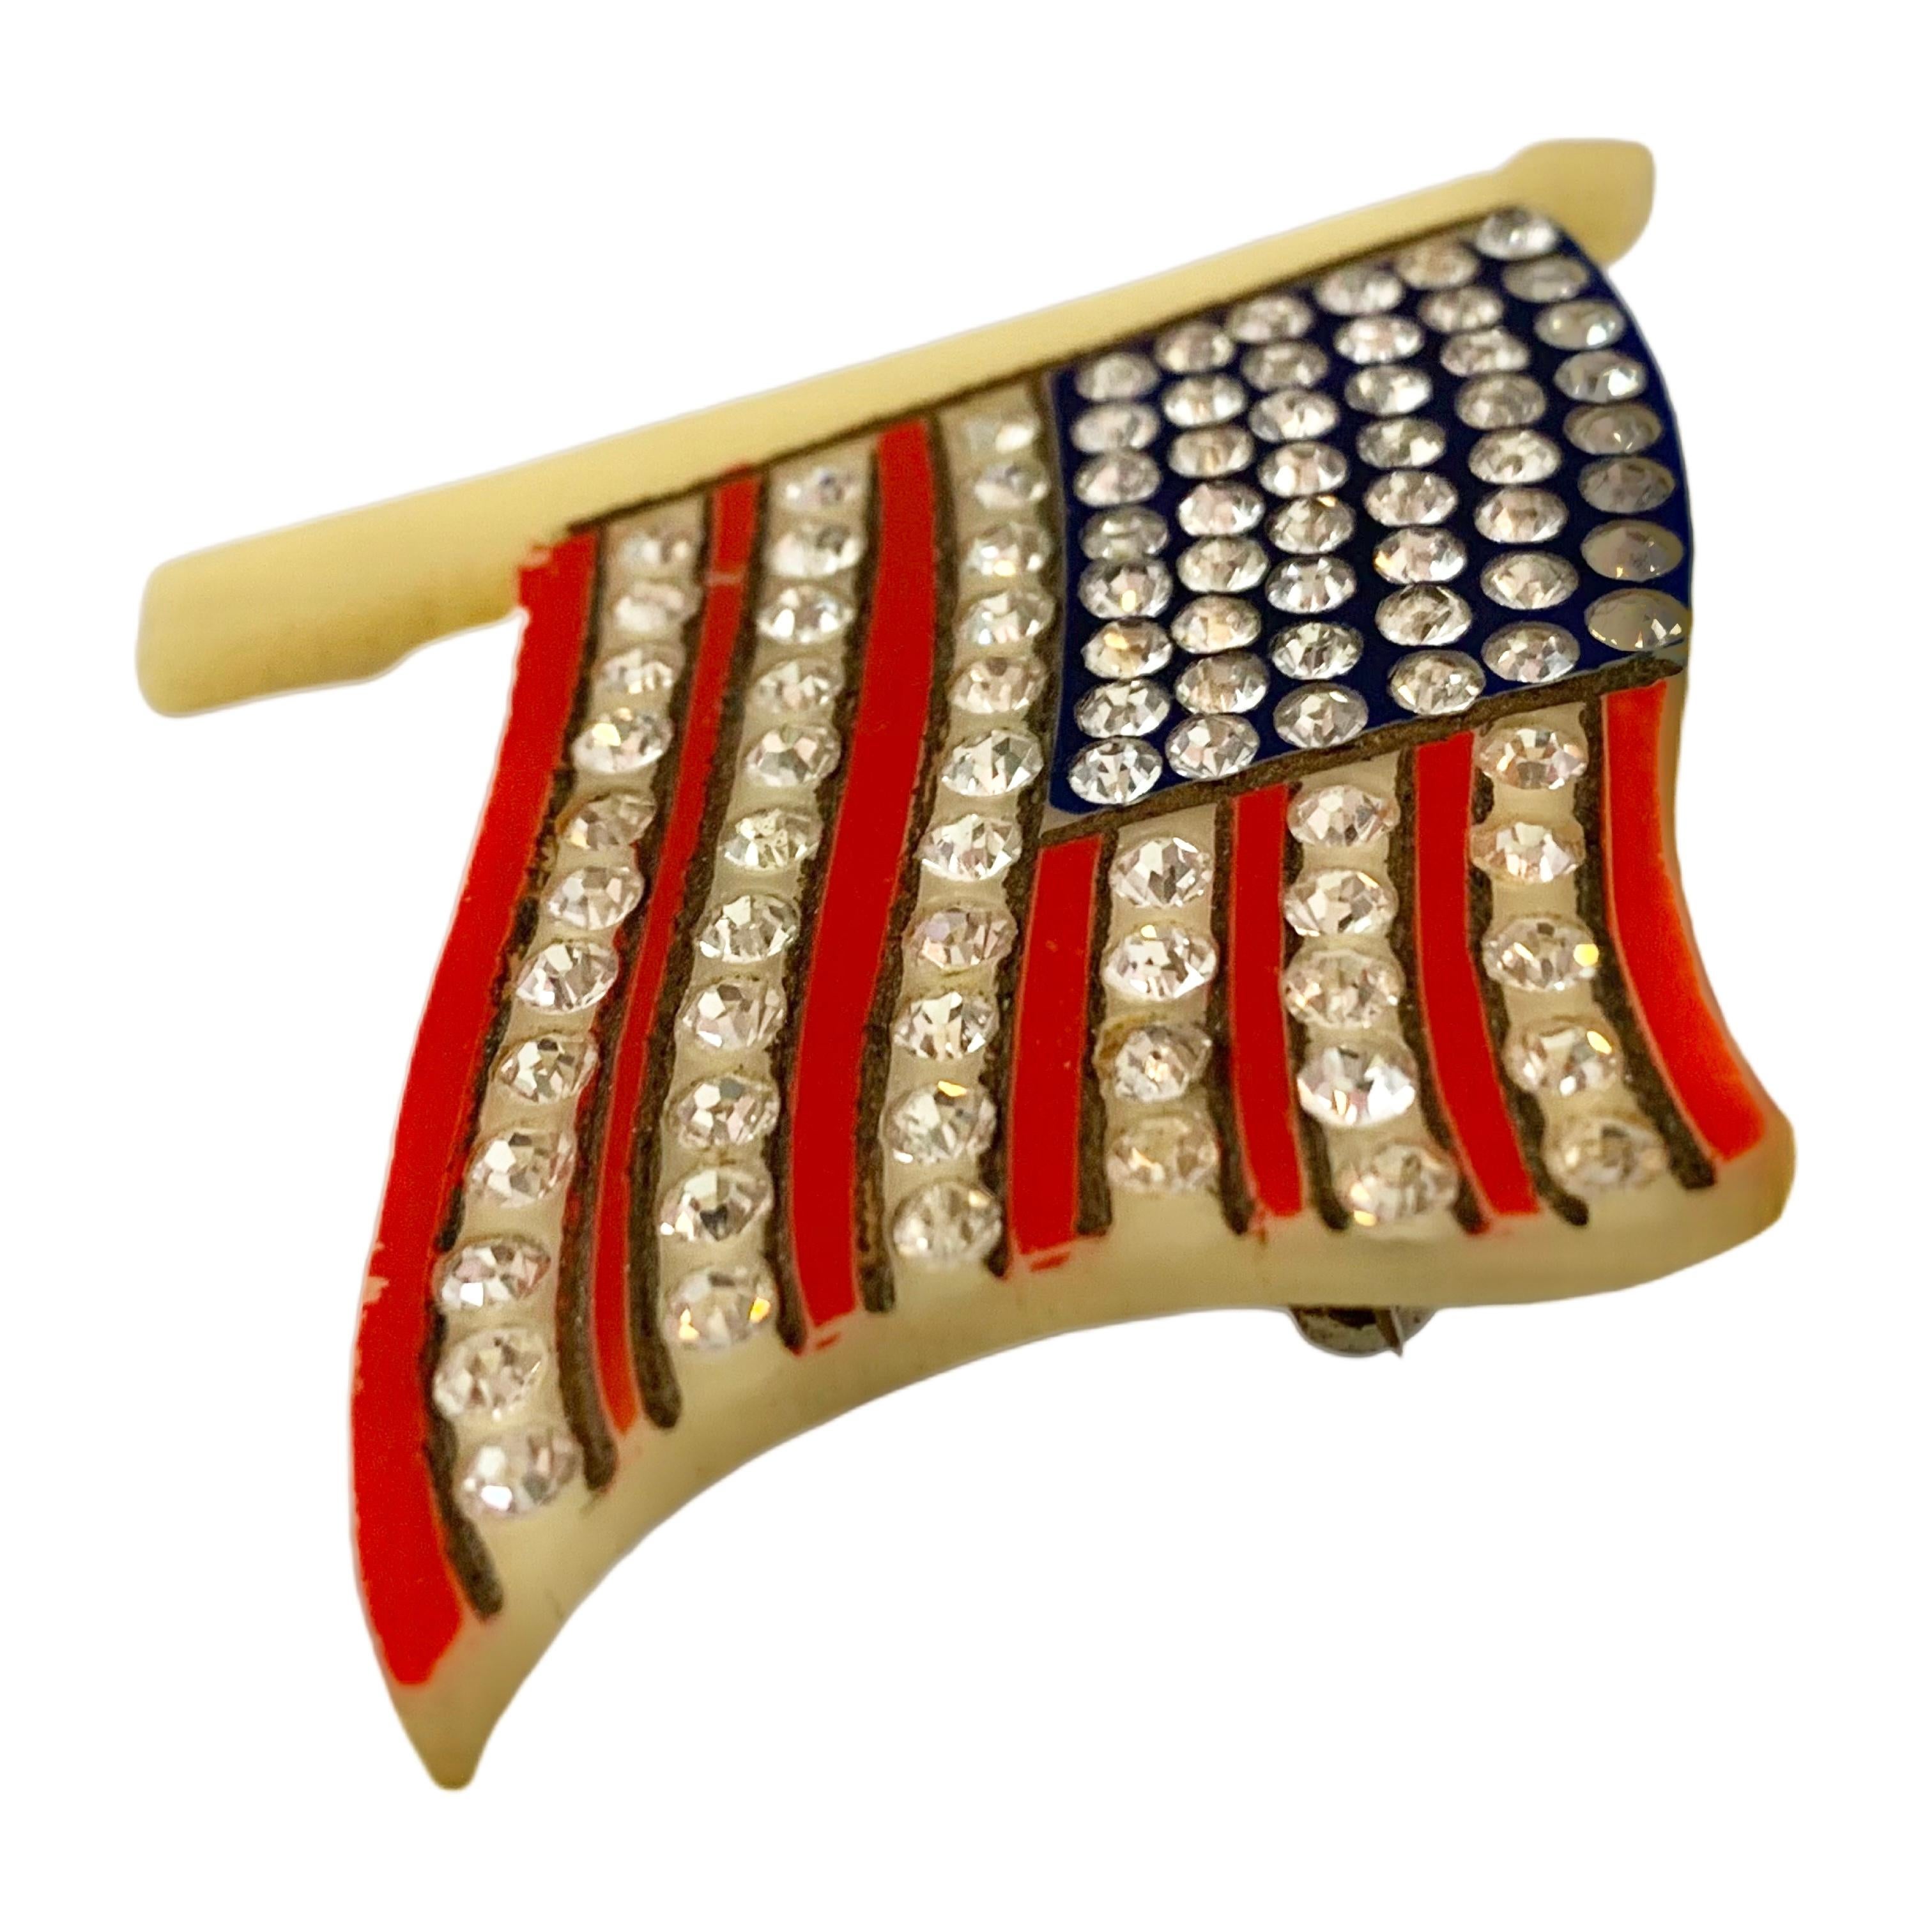 Festive American flag Celluloid Crystals Brooch
